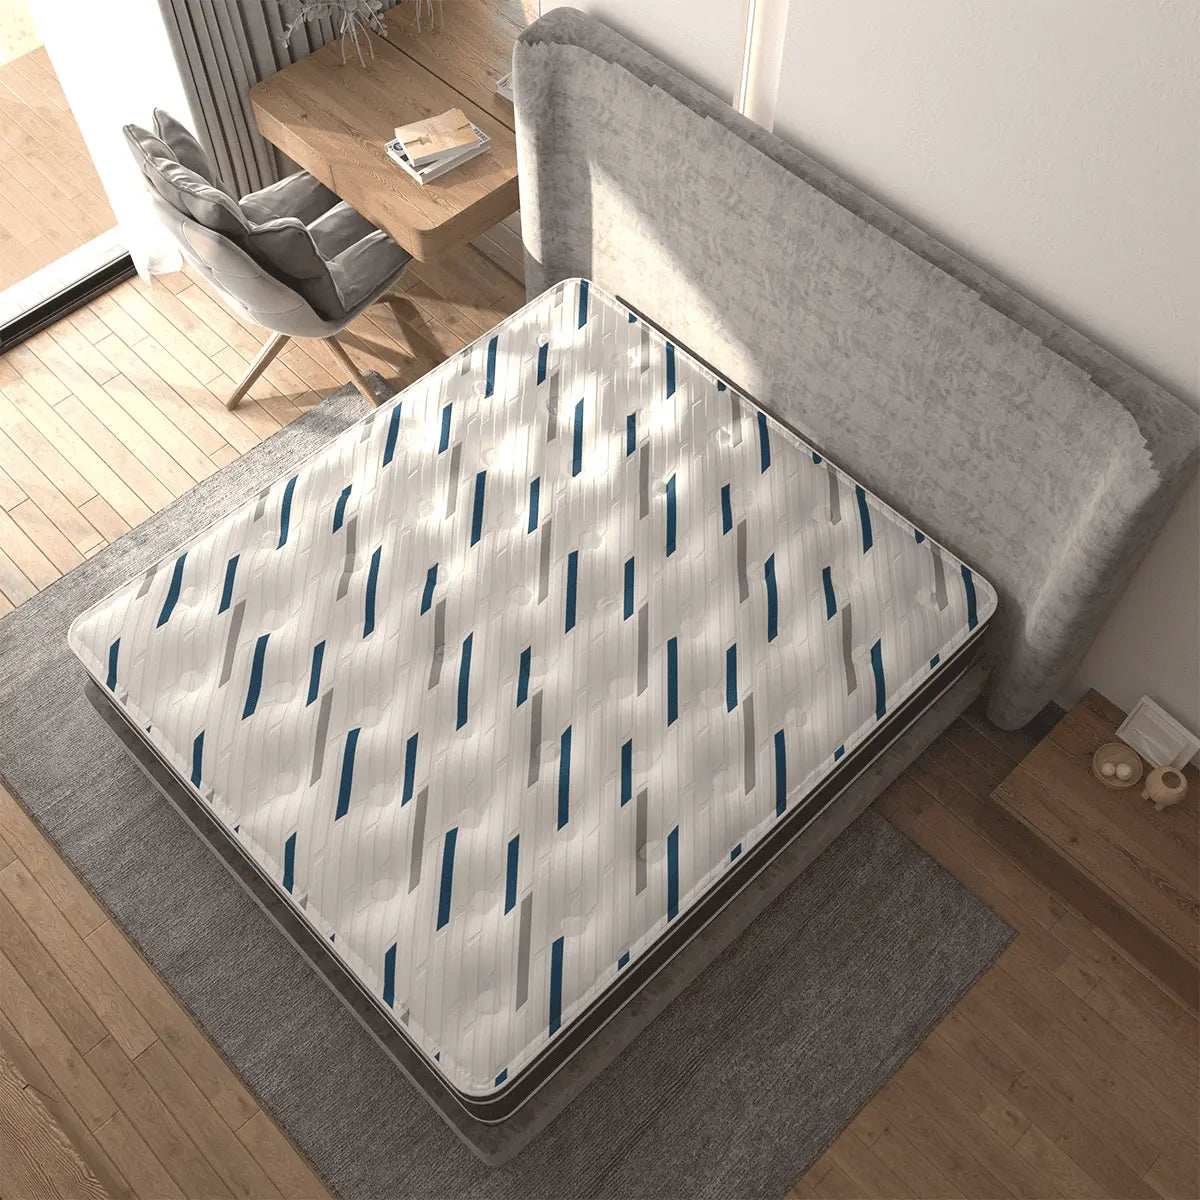 bodiform gel euro top mattress by englander - top view